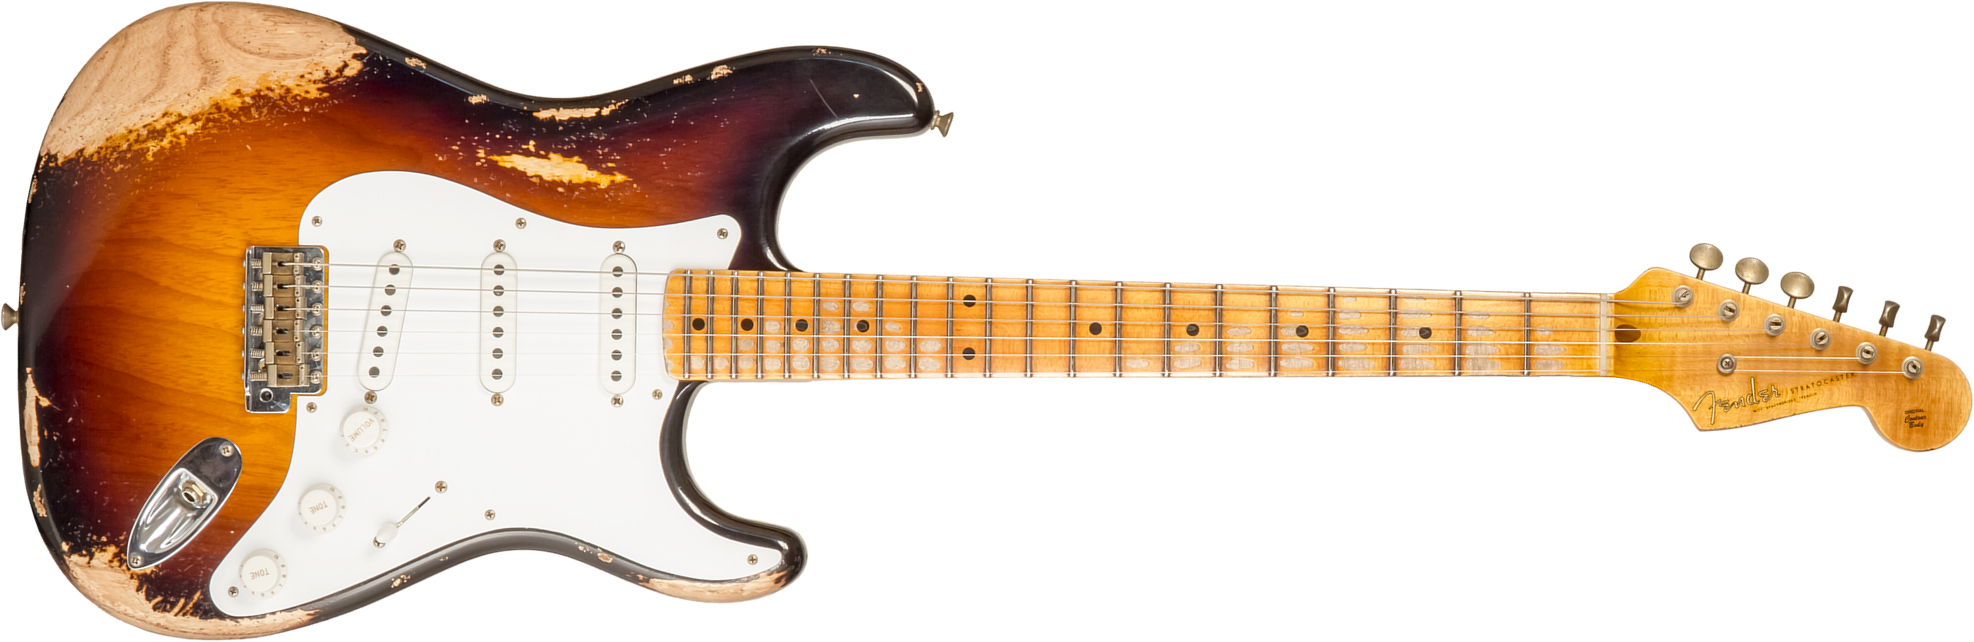 Fender Custom Shop Strat 1954 70th Anniv. 3s Trem Mn #xn4308 - Heavy Relic Wide Fade 2-color Sunburst - Elektrische gitaar in Str-vorm - Main picture